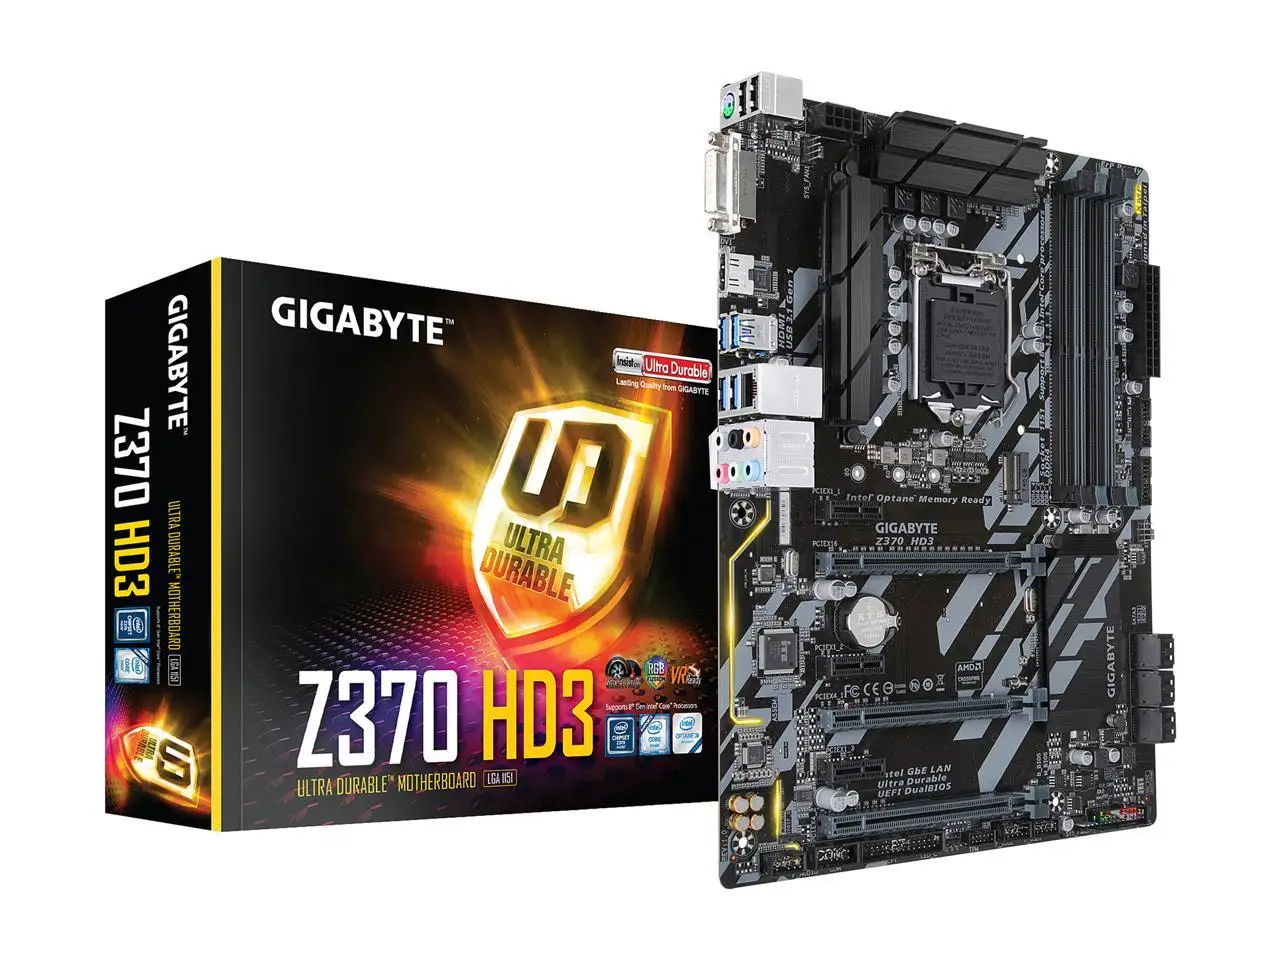 

GIGABYTE Z370 HD3 (rev. 1.0) LGA 1151 (300 Series) Intel Z370 HDMI SATA 6Gb/s USB 3.1 ATX Intel Motherboard